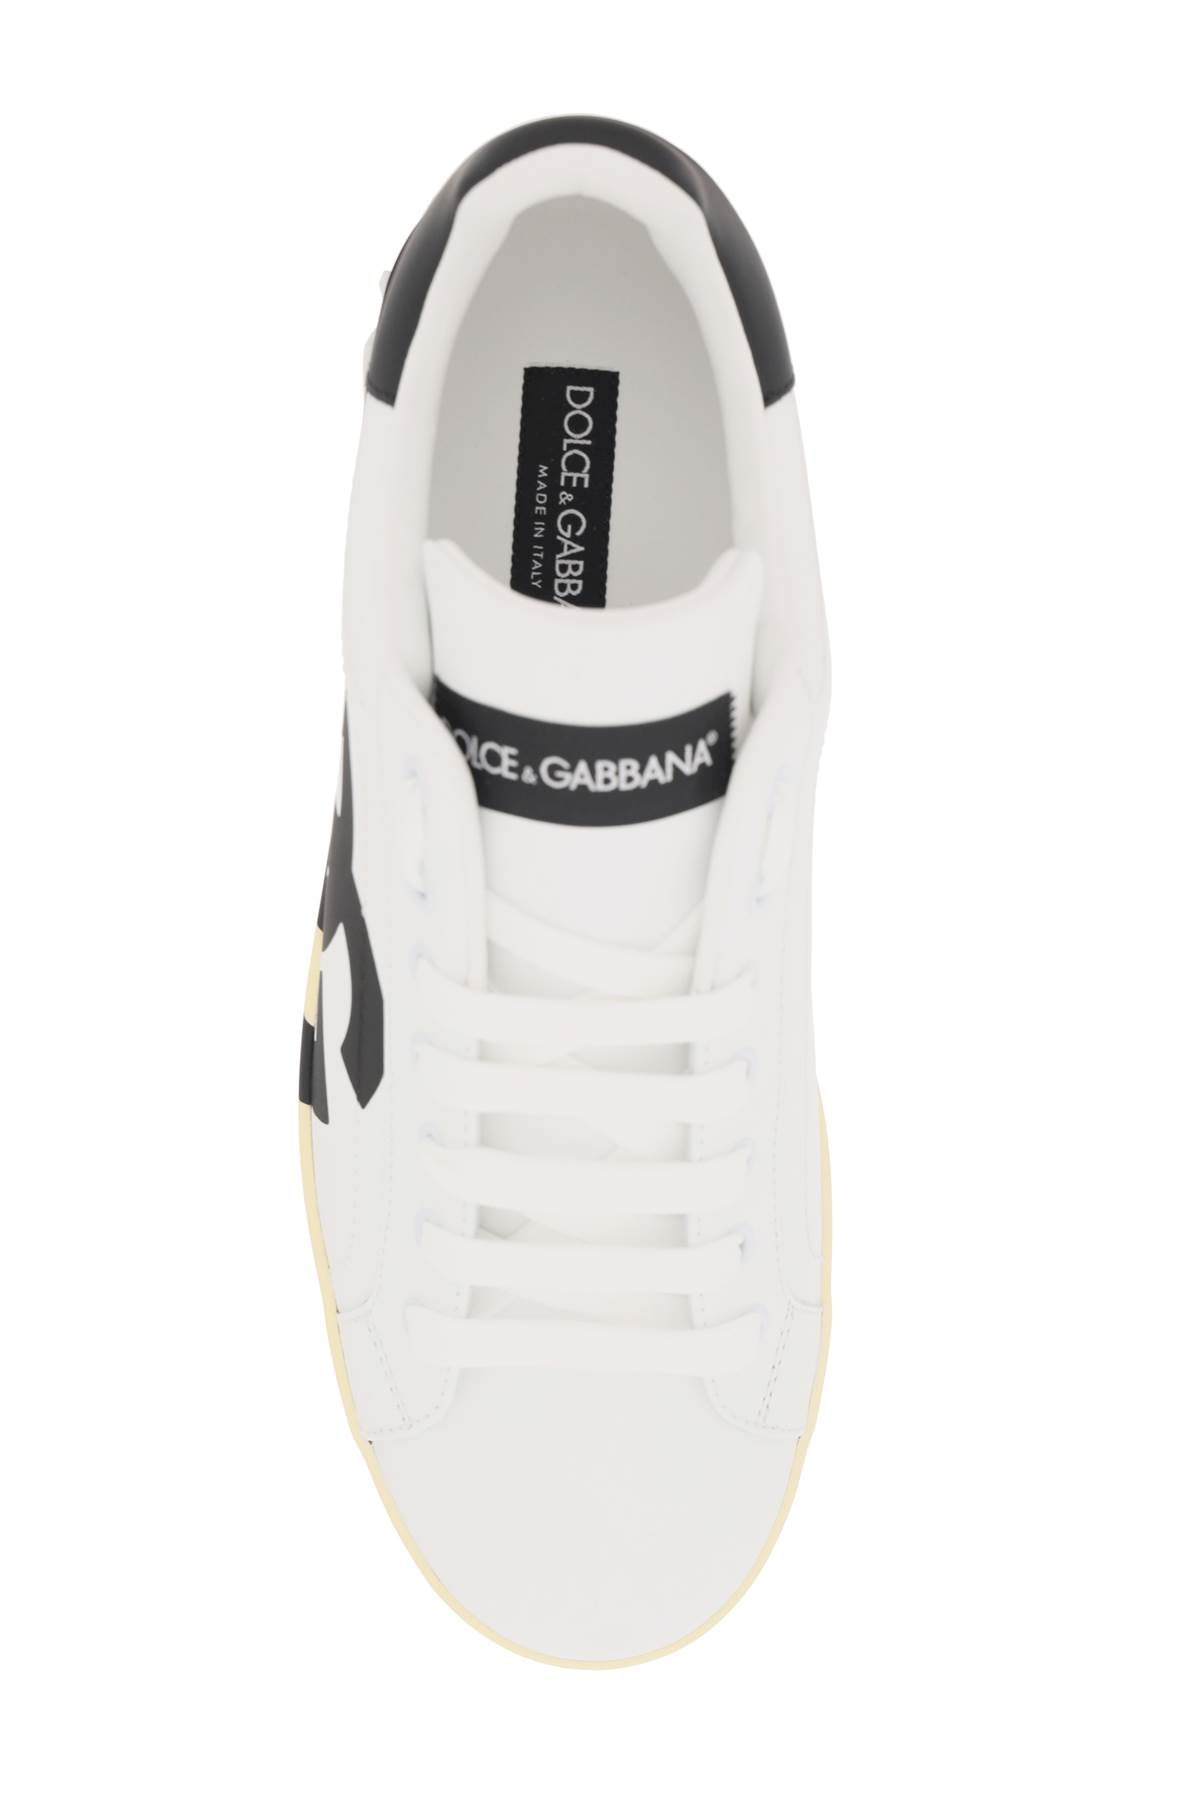 Dolce & gabbana leather portofino sneakers with dg logo-1